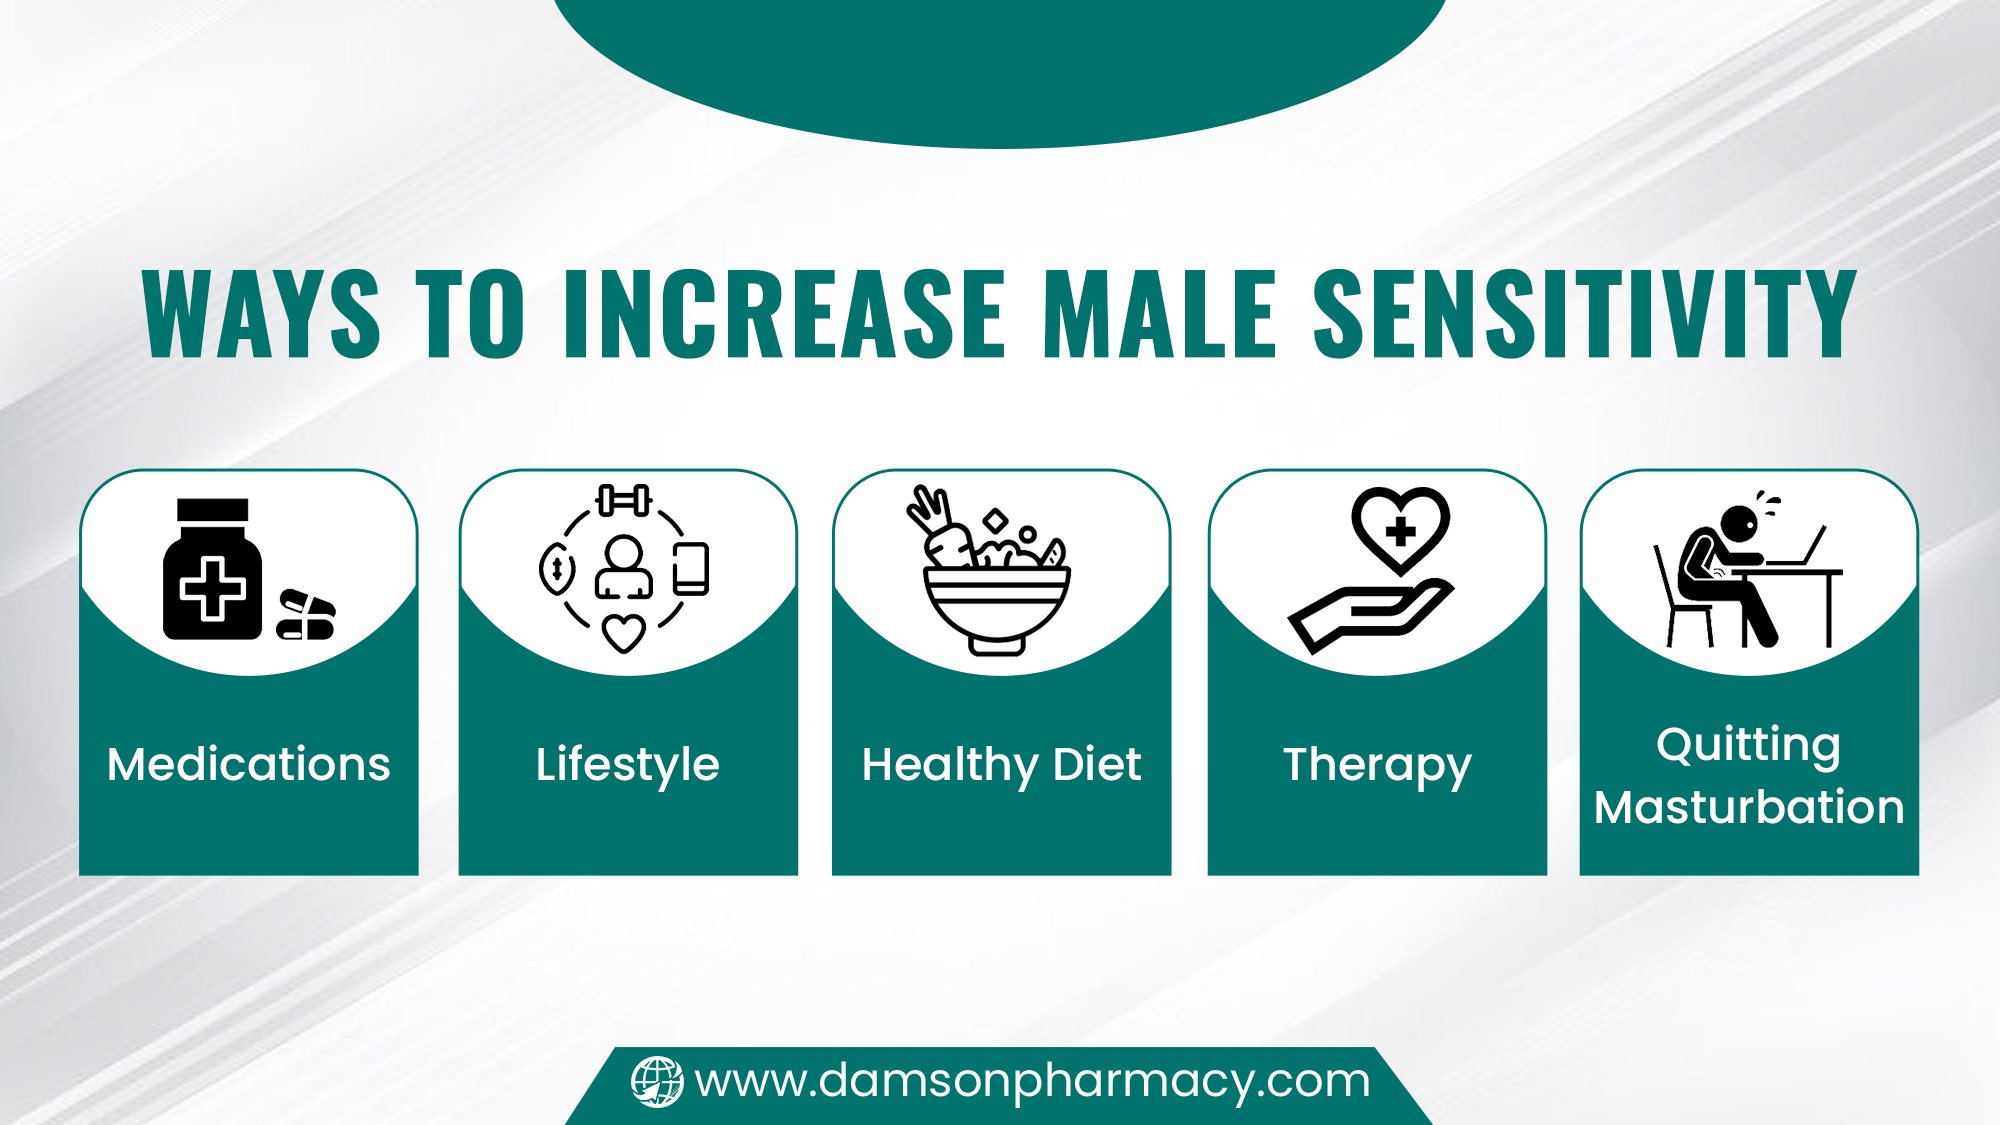 Ways to Increase Male Sensitivity